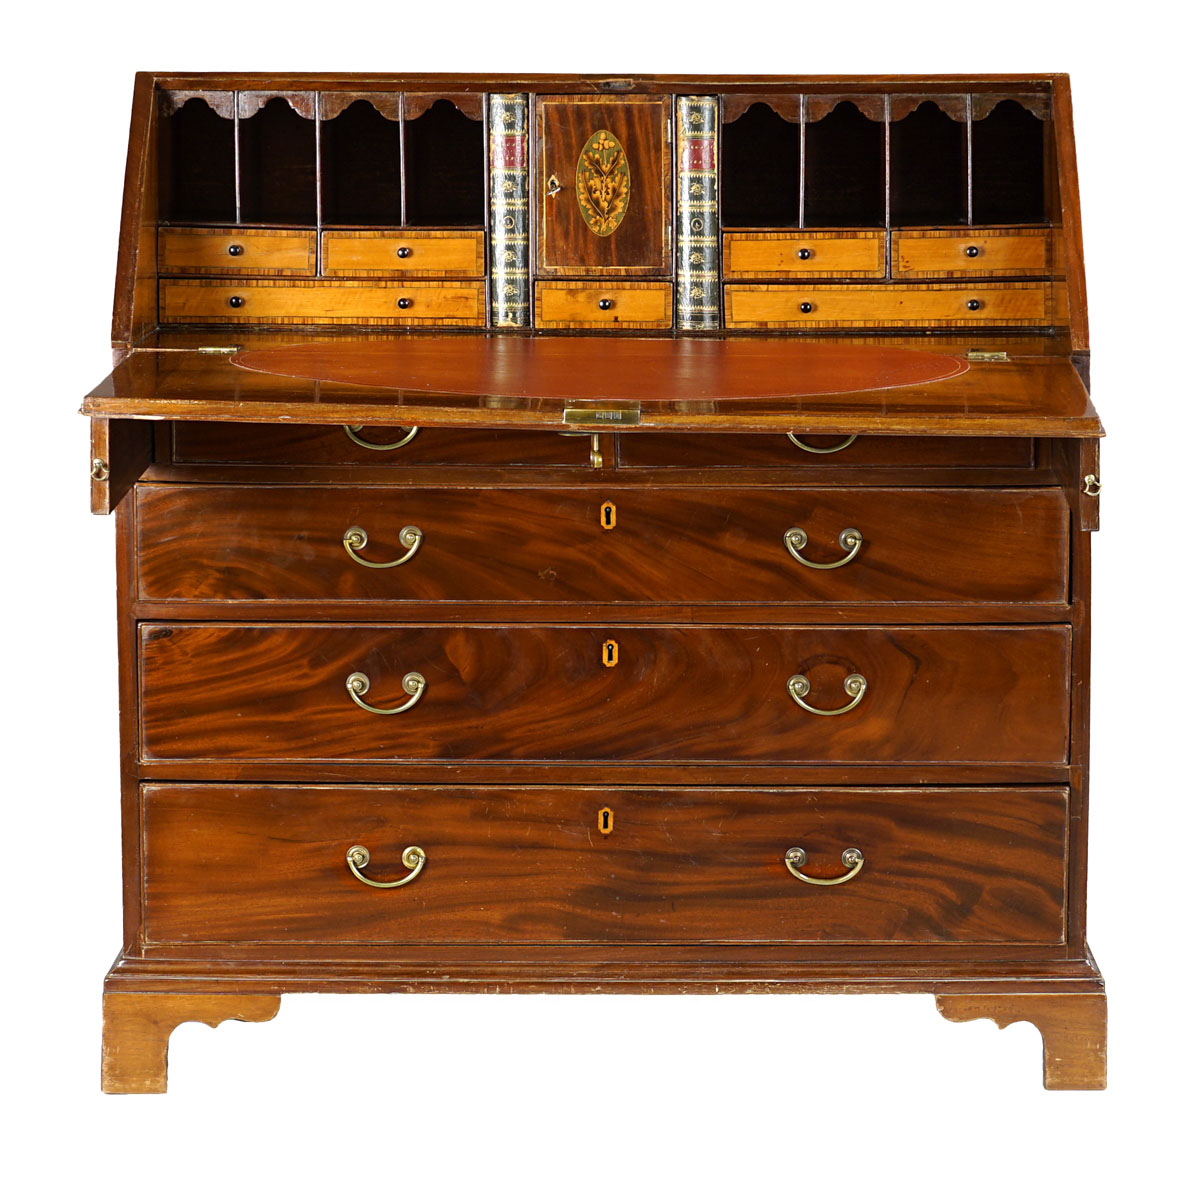 Mahogany flap furniture England, 18th - 19th century 109x105x50 cm. - Image 2 of 2